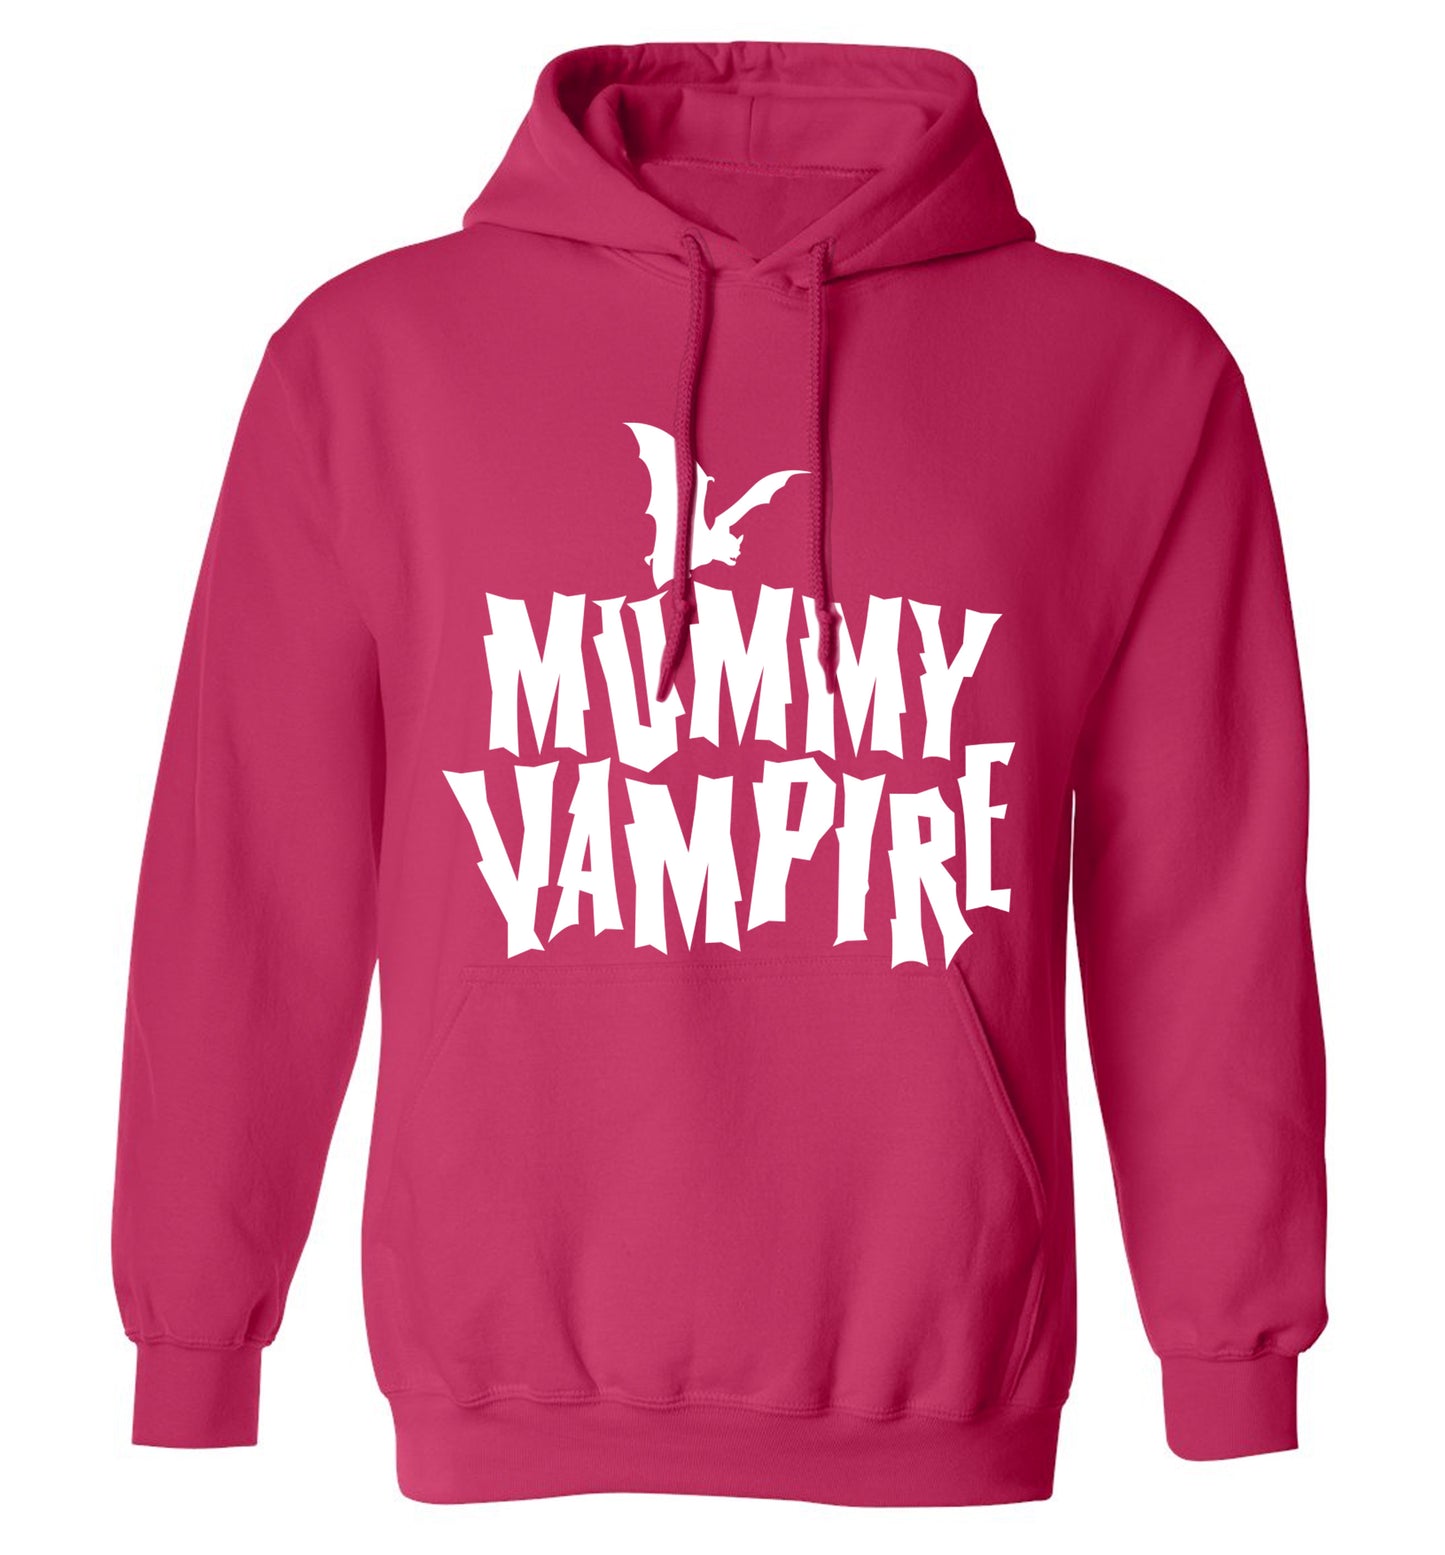 Mummy vampire adults unisex pink hoodie 2XL